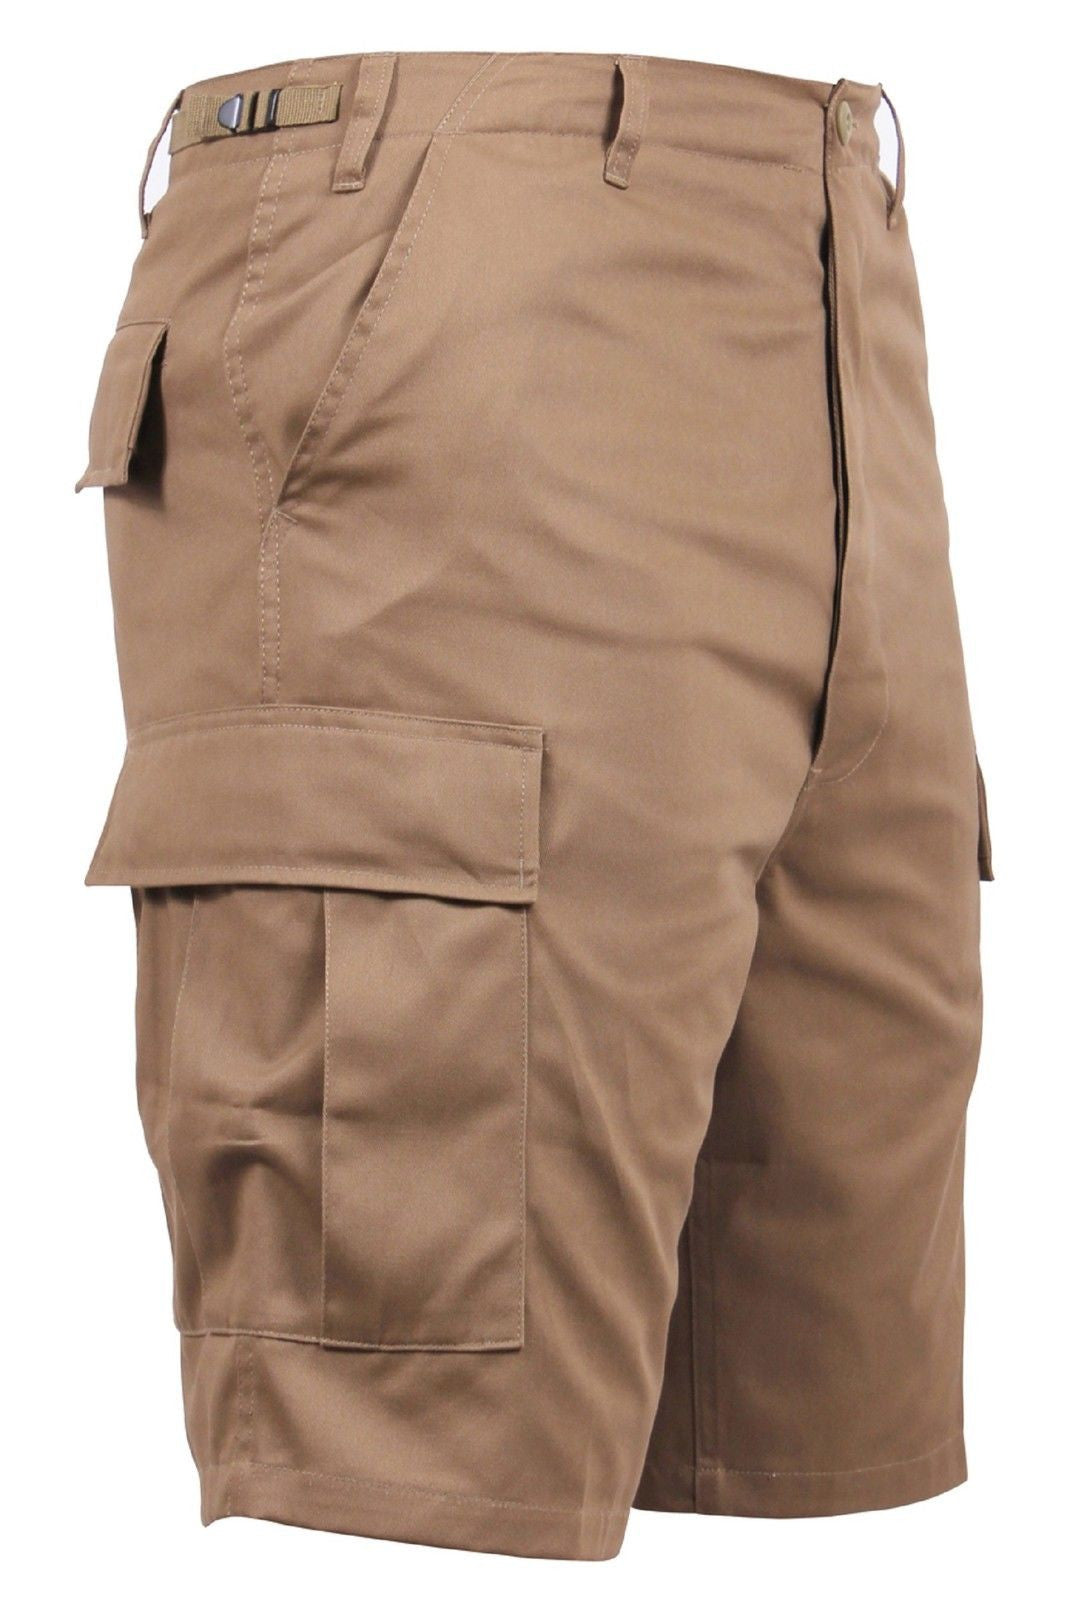 Men's Coyote Brown BDU Cargo Shorts - 6 Pocket Casual GI Style Shorts